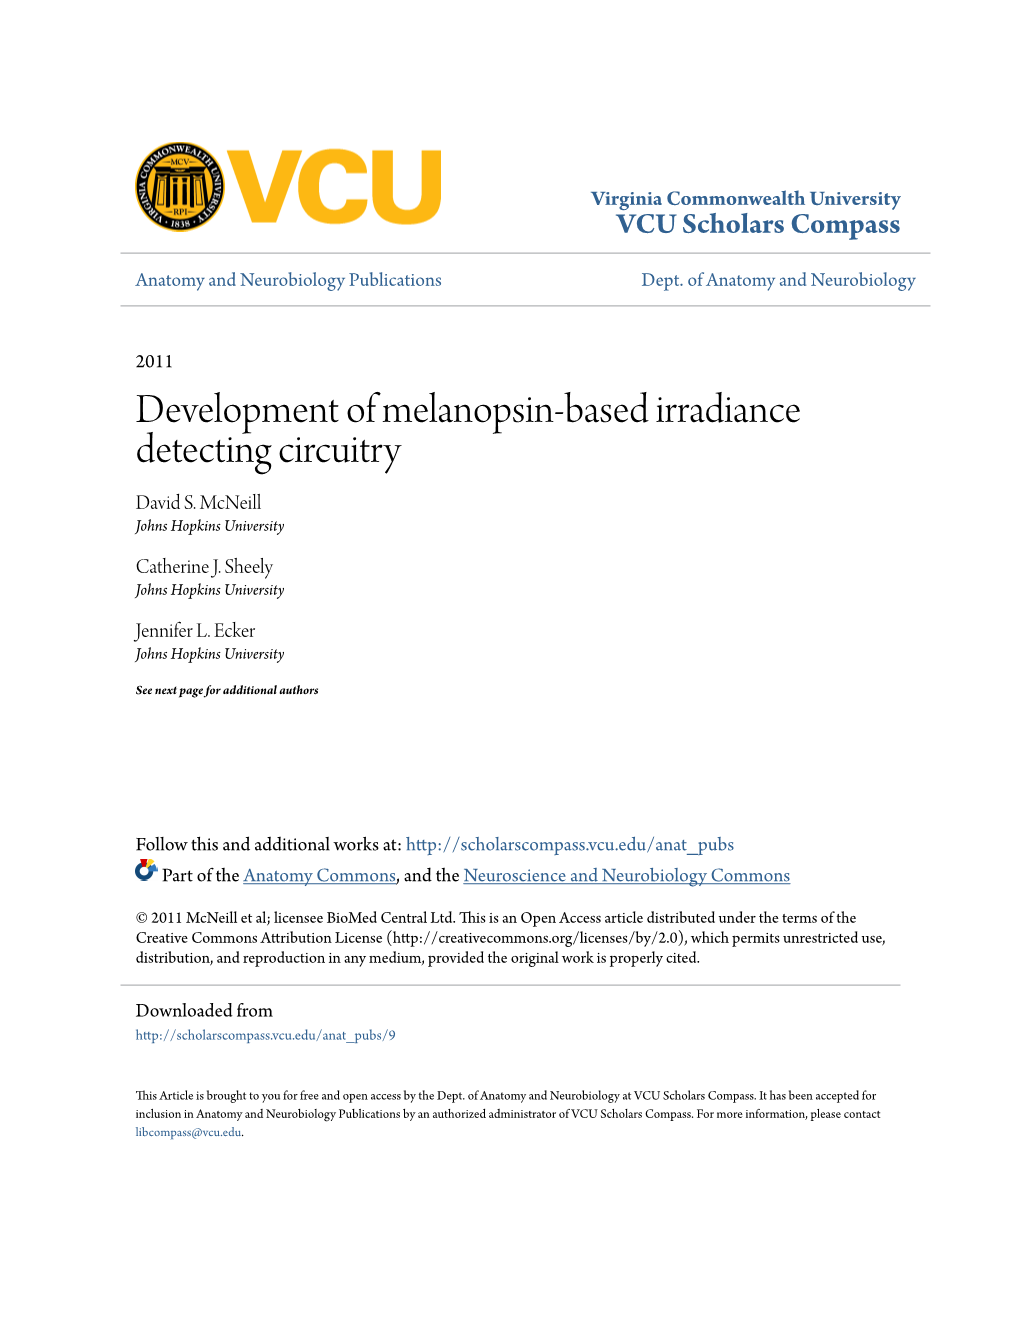 Development of Melanopsin-Based Irradiance Detecting Circuitry David S